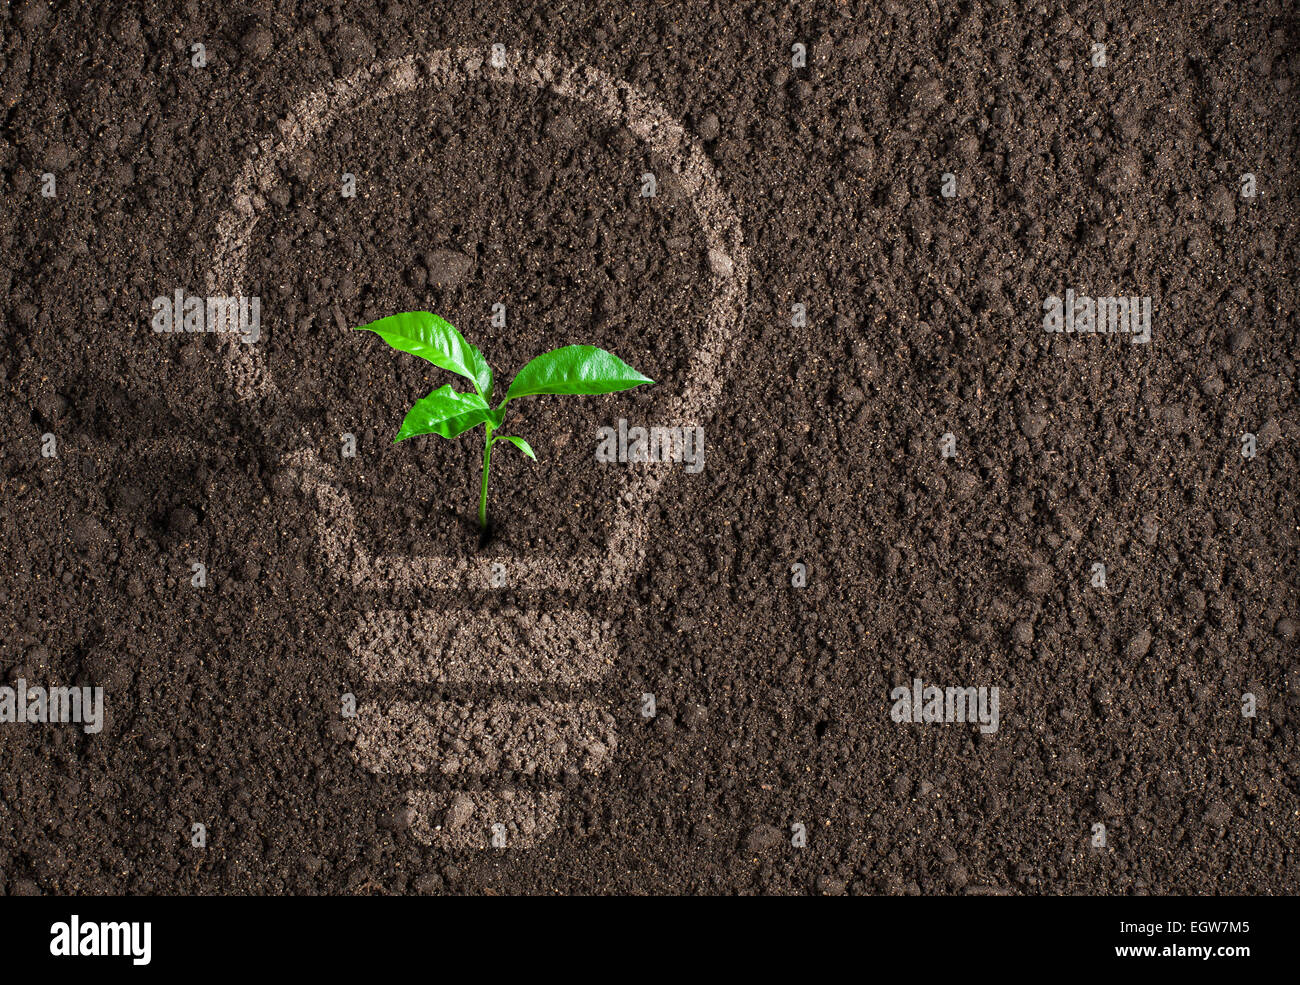 Green plant in light bulb silhouette on soil background Stock Photo